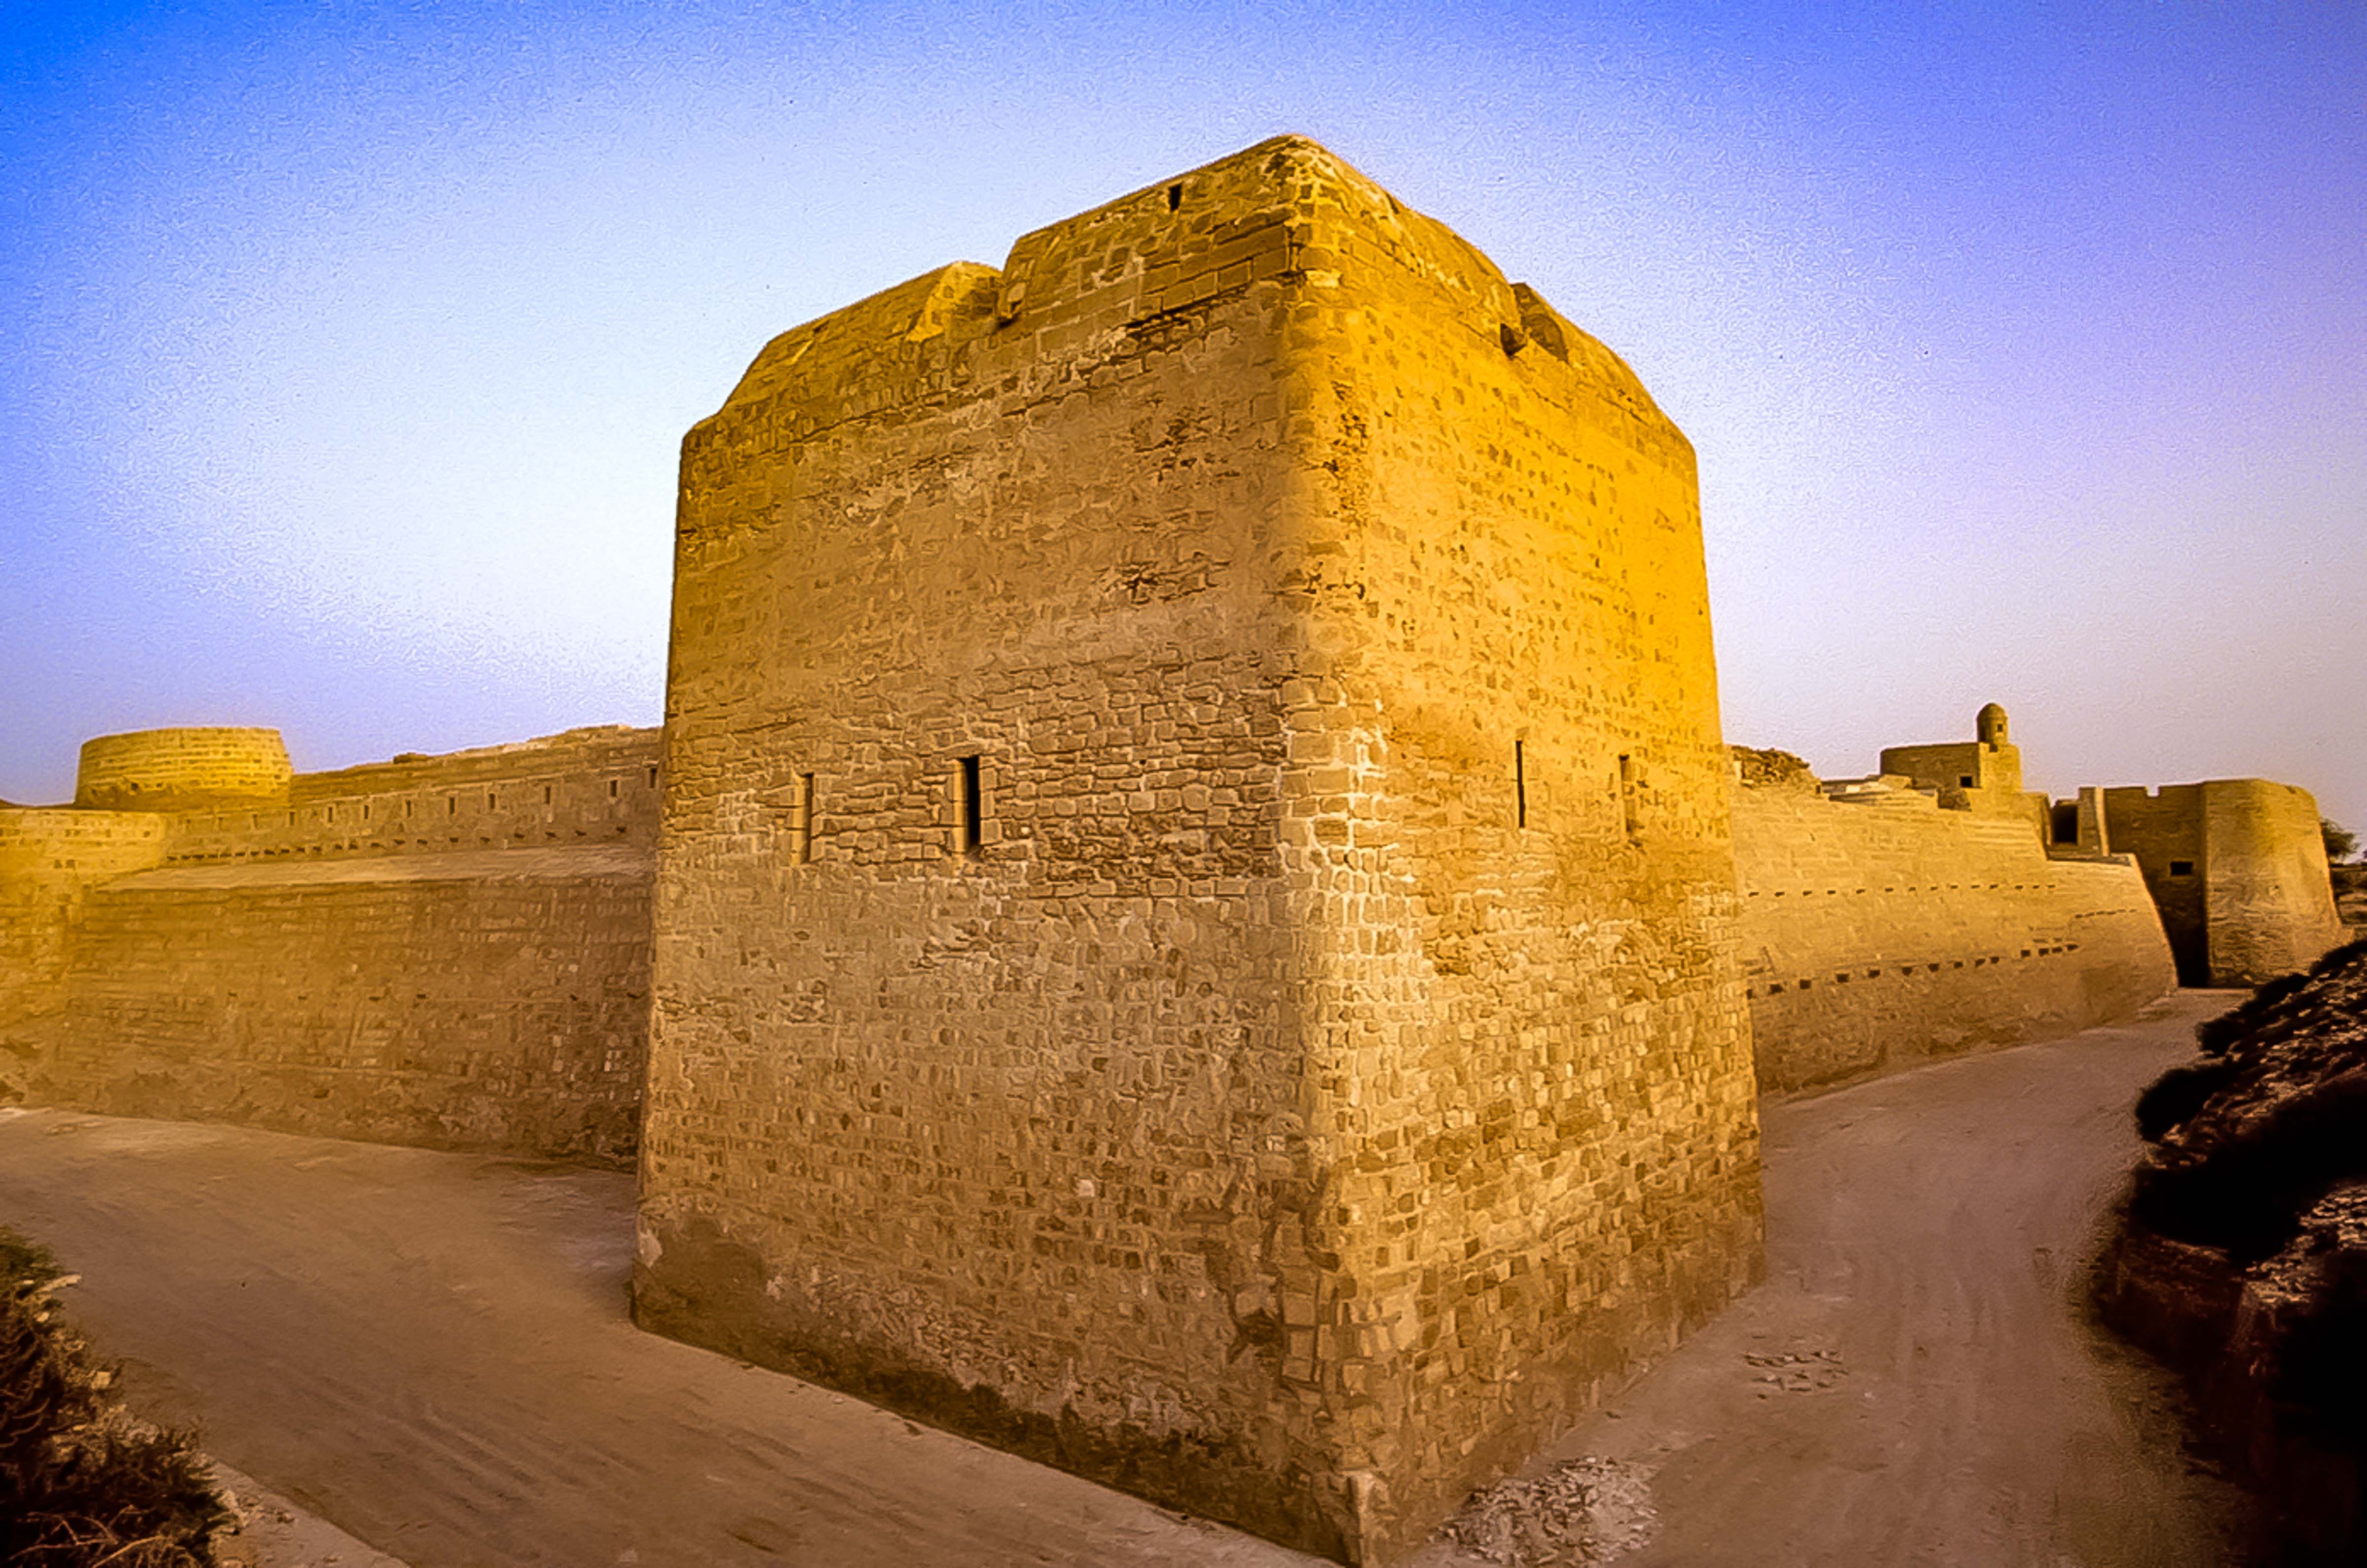 Qatar, Old Fort, 2000